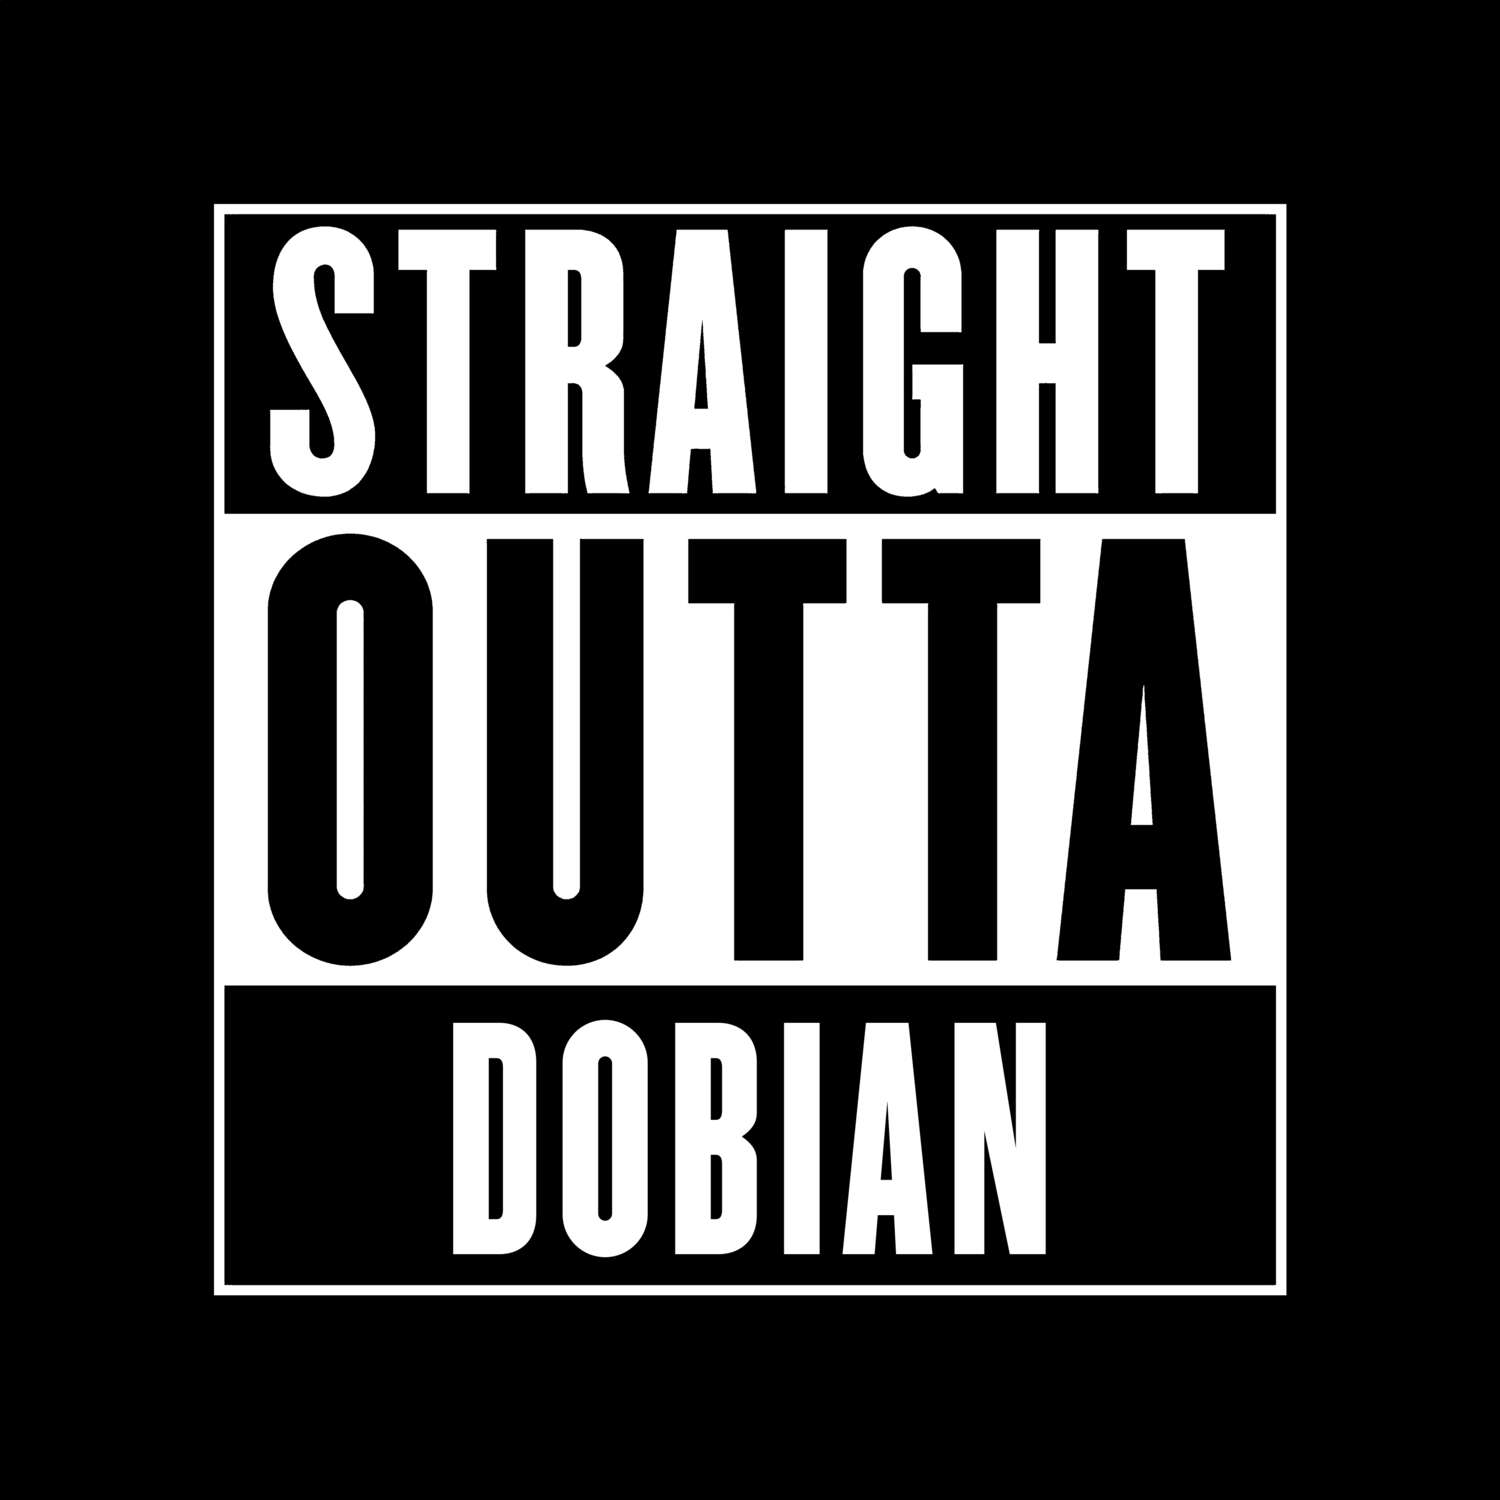 Dobian T-Shirt »Straight Outta«